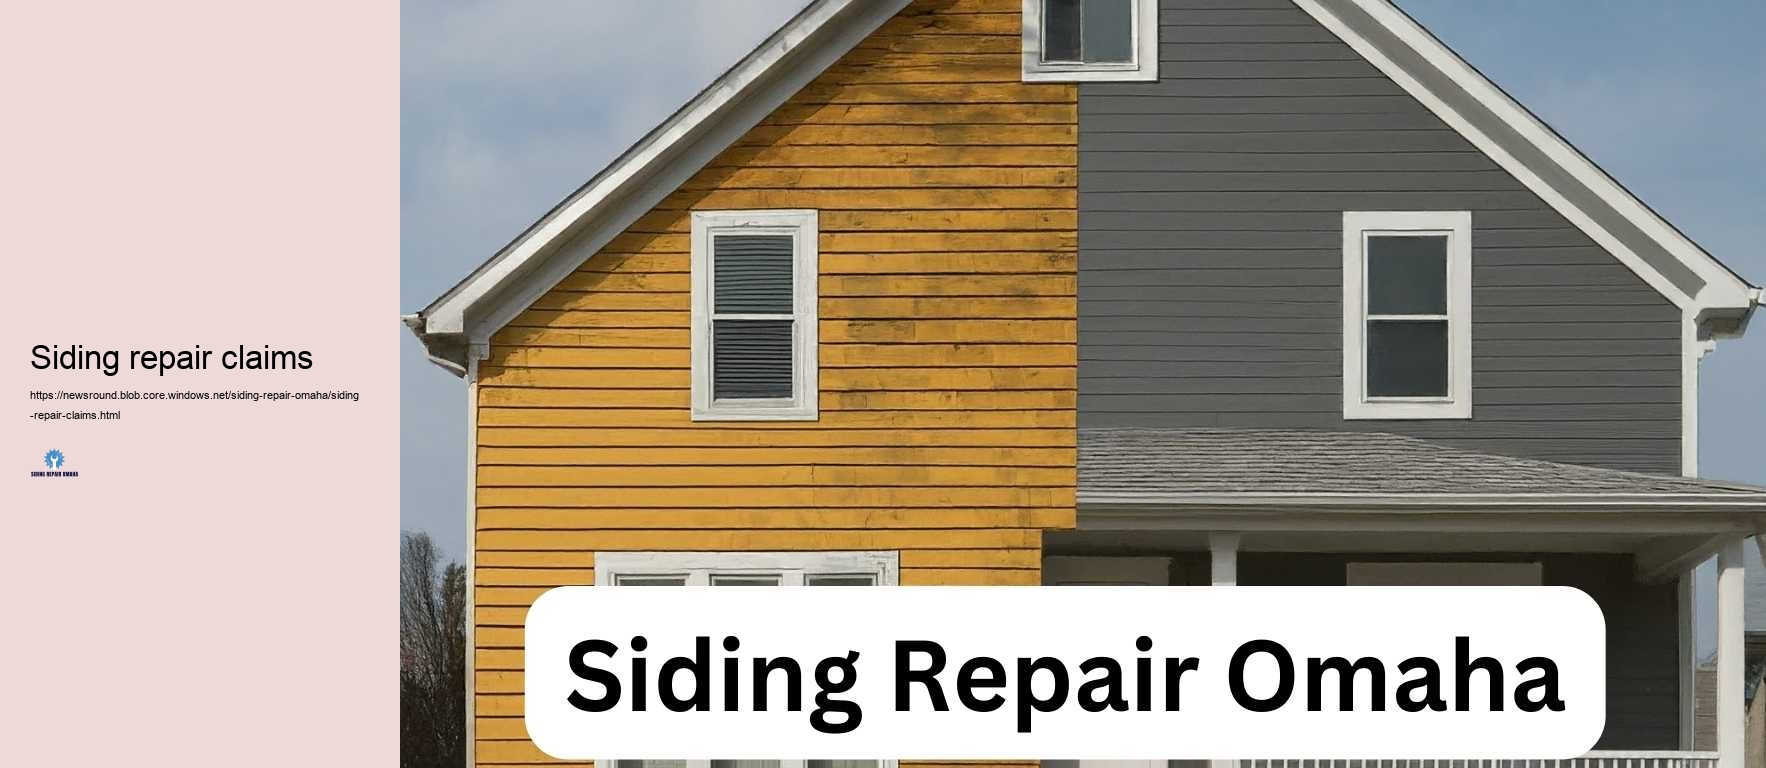 Siding repair claims